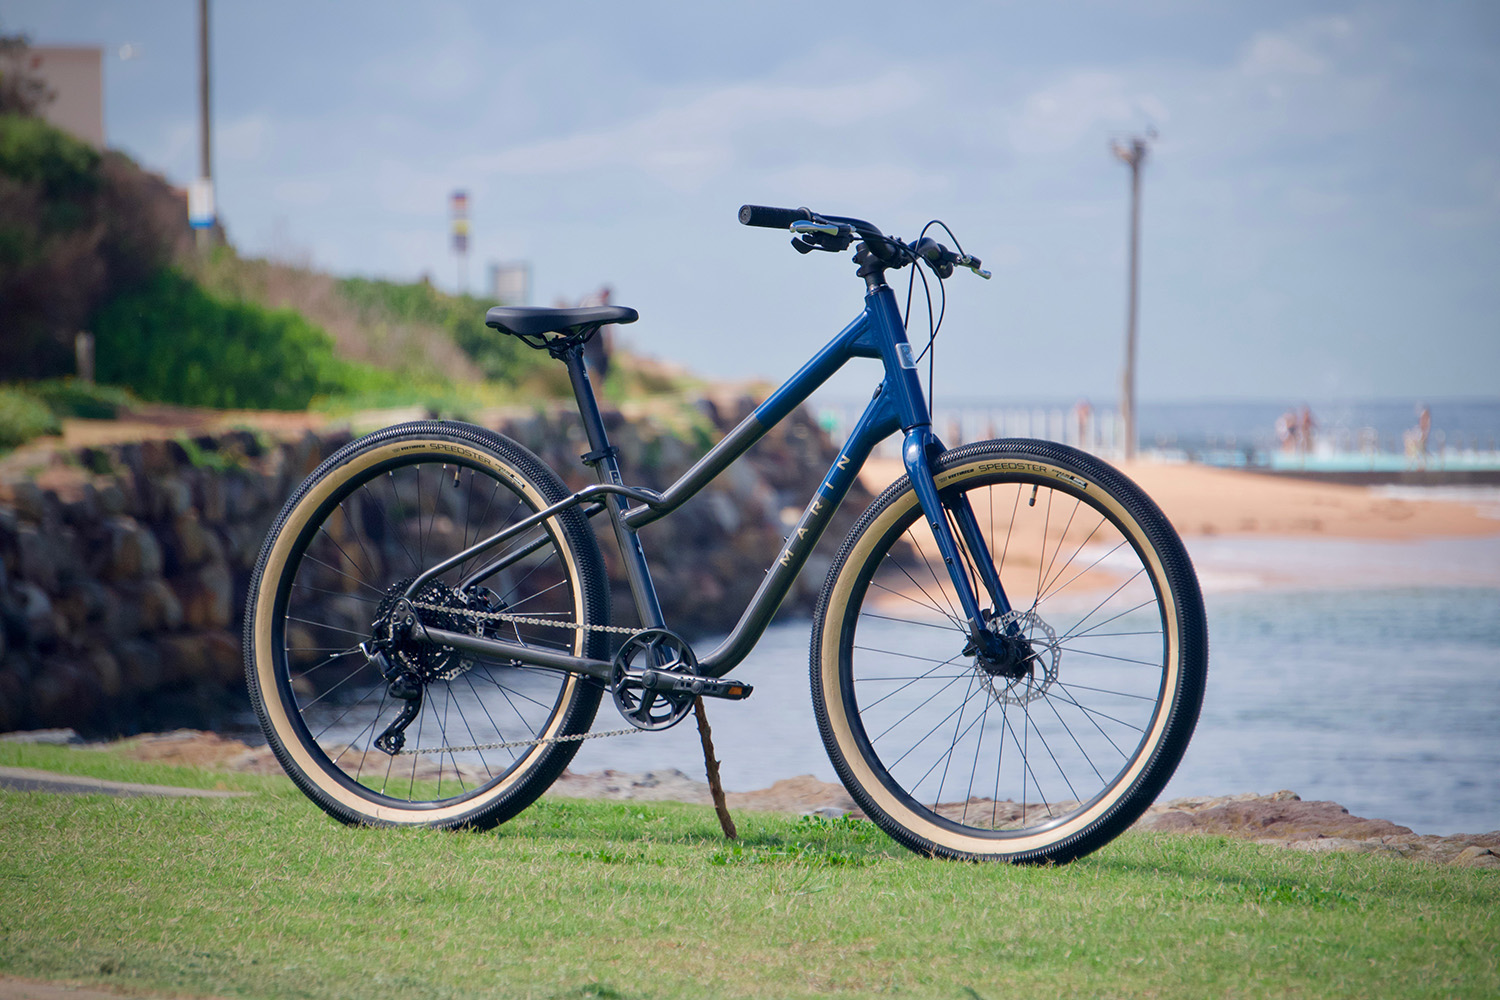 biznes rowerowy po pandemii marin bikes sklepy rowerowe motor-land